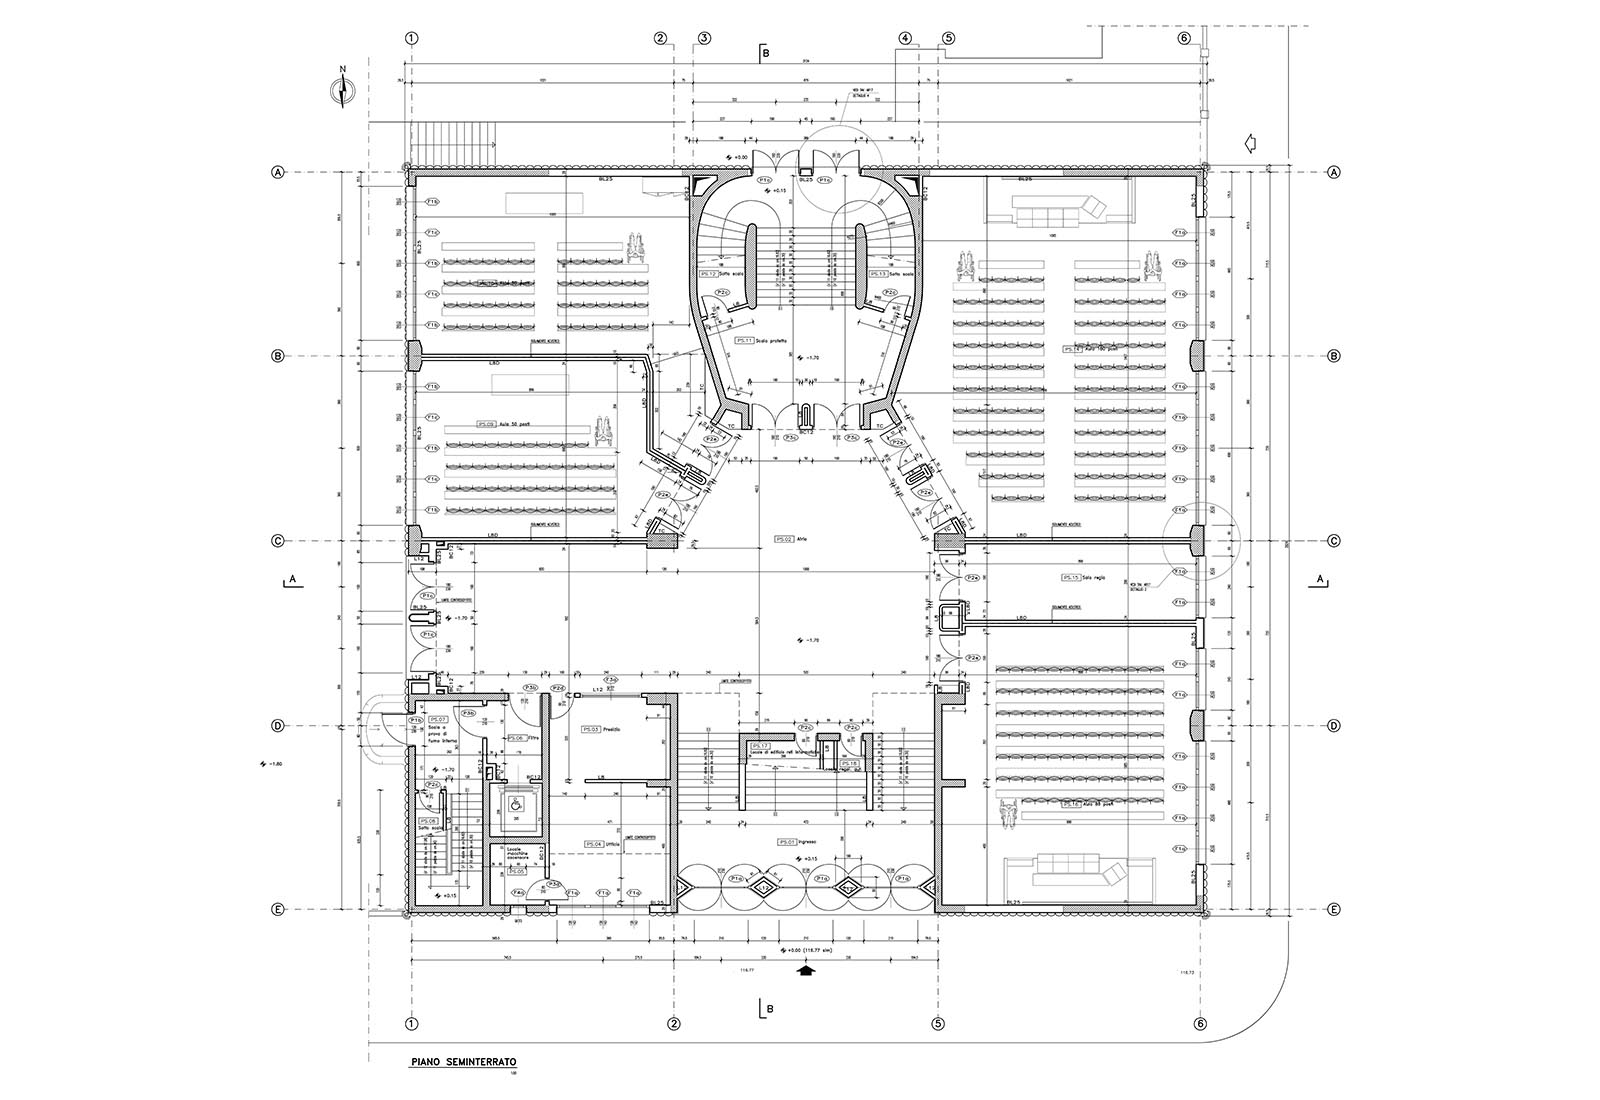 Building 25 Politecnico di Milano - Basement floor plan